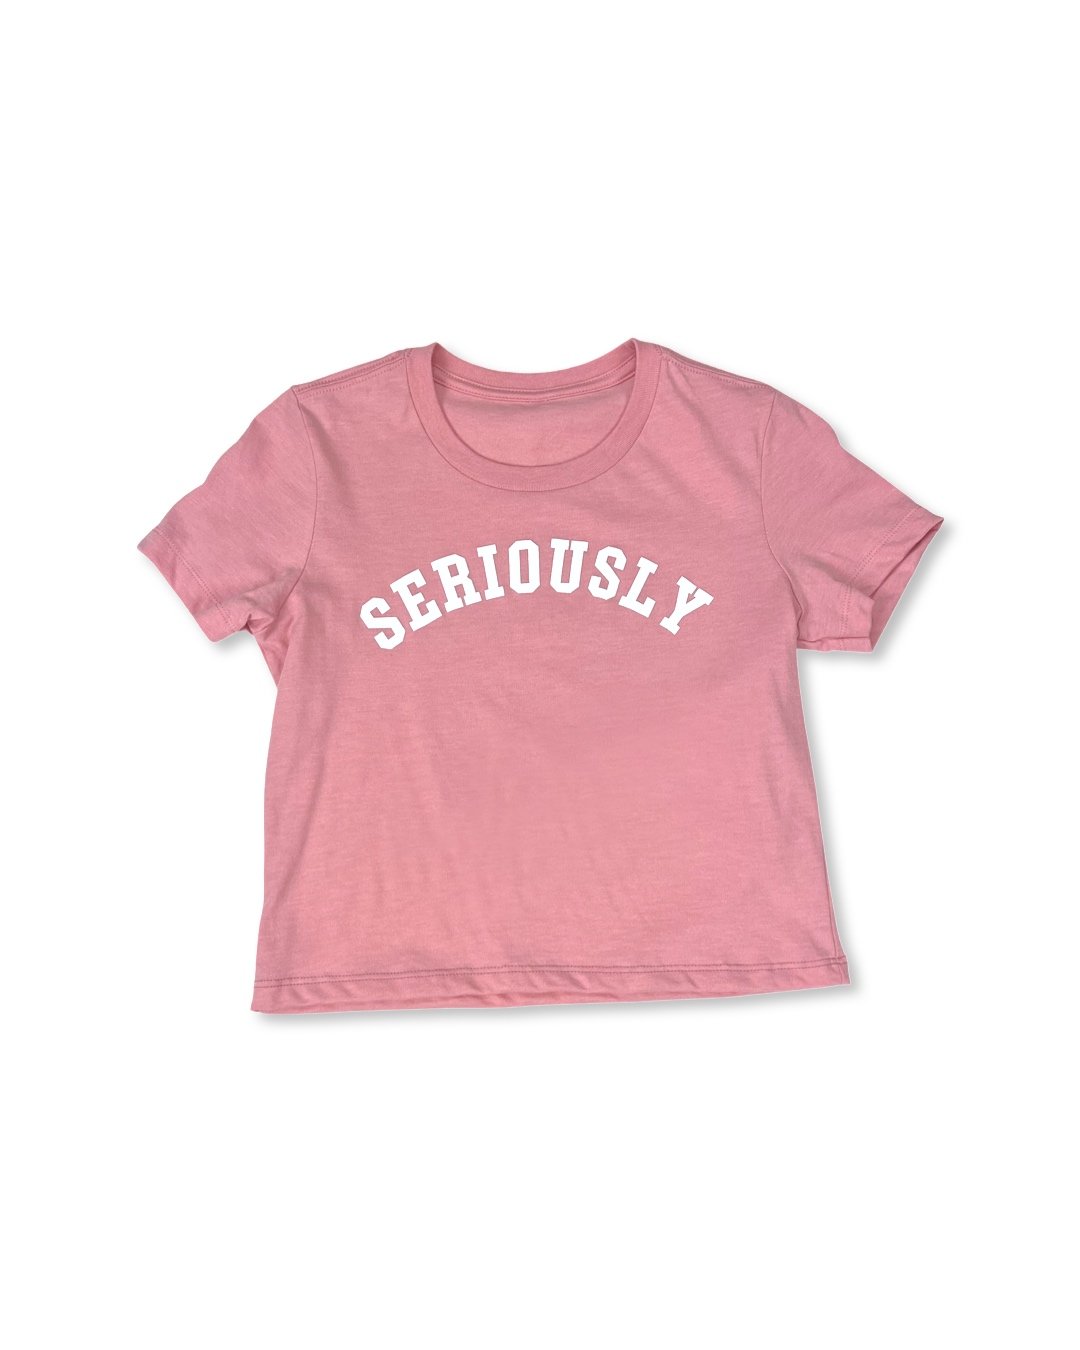 shirt-pink1.jpg